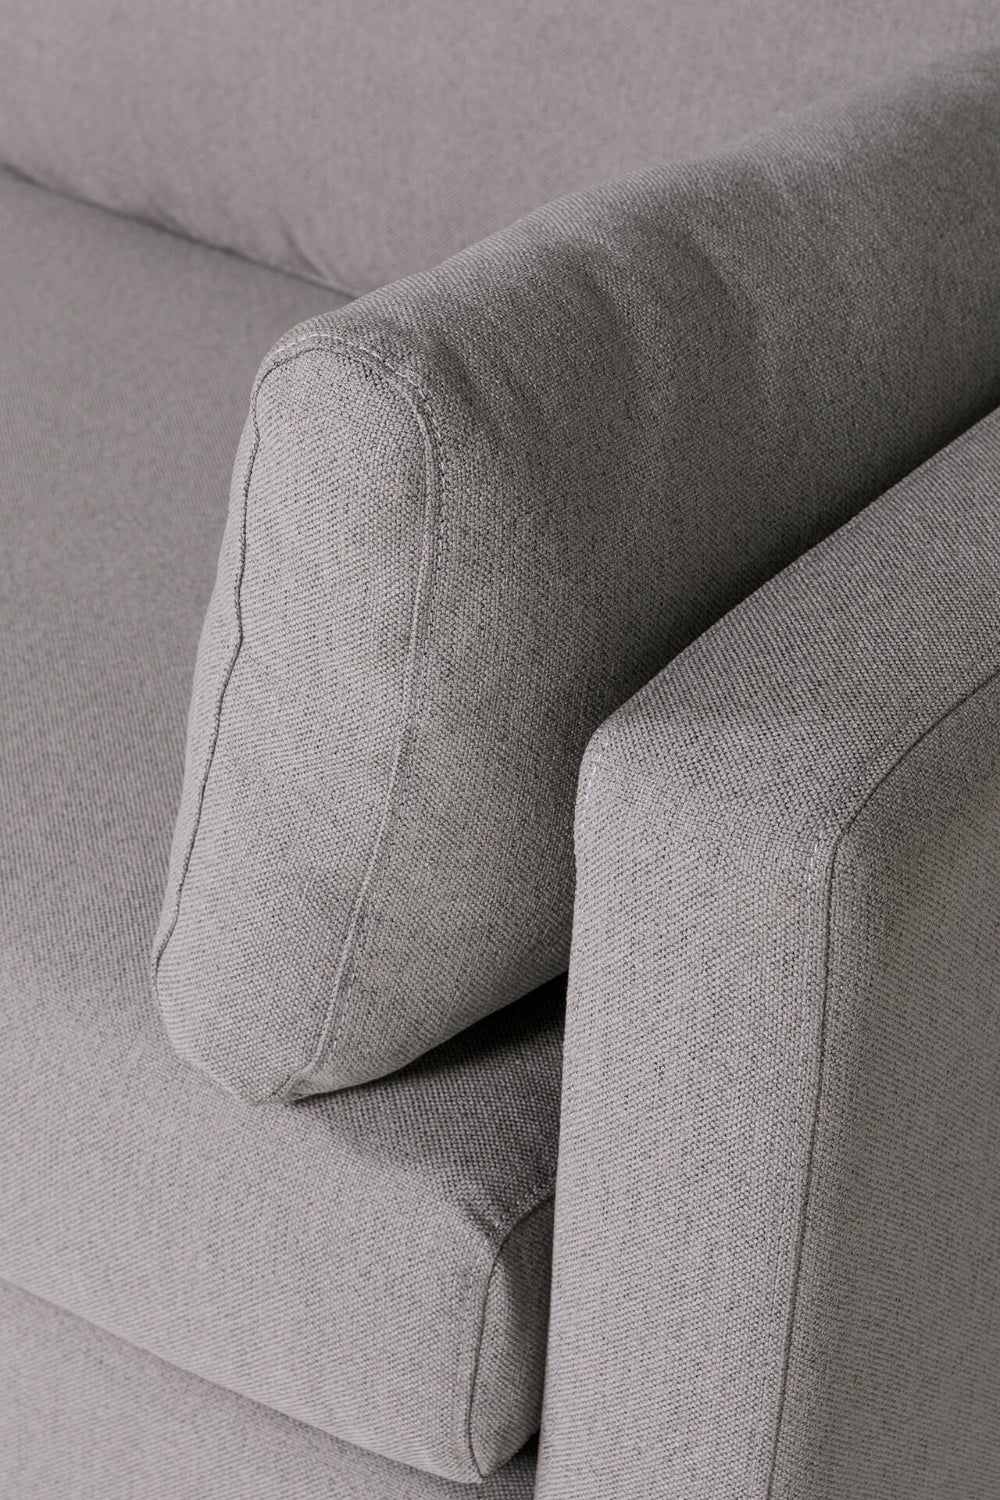 Apollo Sofa Greige Cushion and Armrest Detail